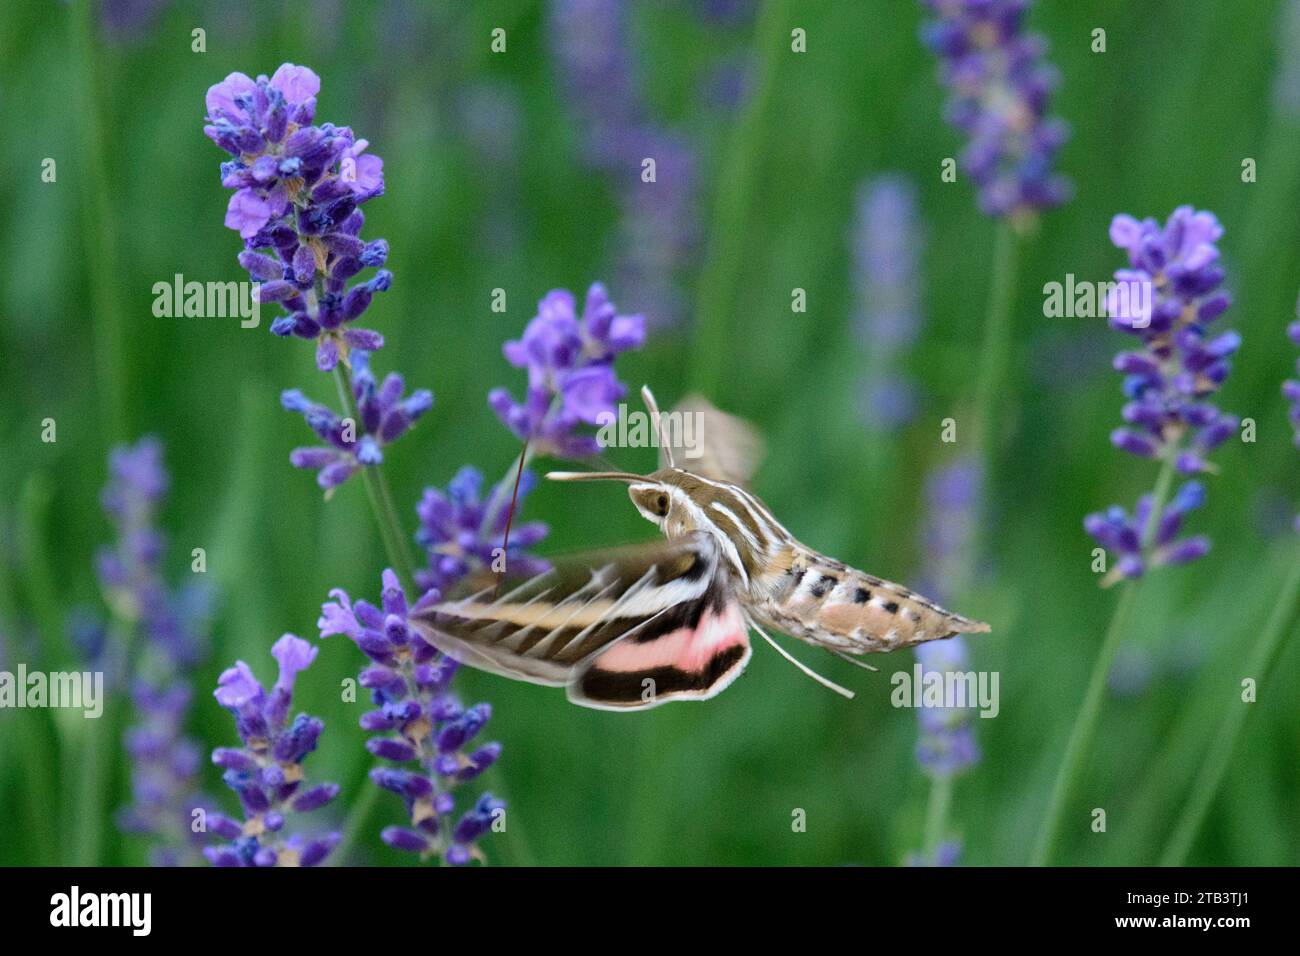 USA, Oregon, Bend, Rancho las Hierbas,White-lined sphinx,Hyles lineata,hummingbird moth Stock Photo